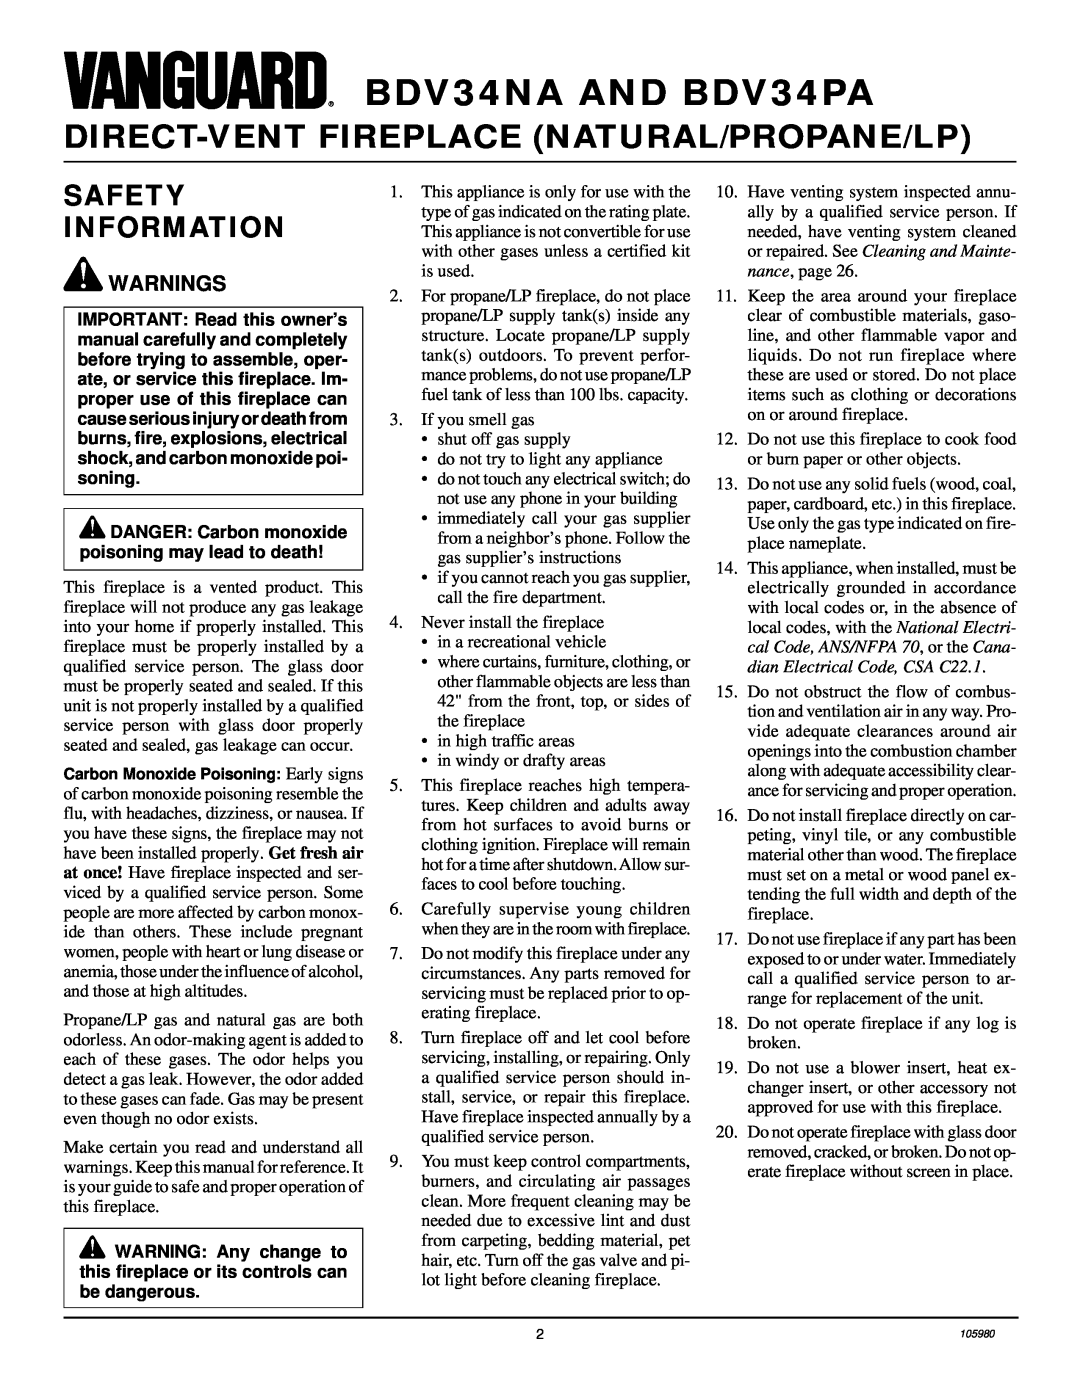 Desa installation manual BDV34NA AND BDV34PA, Direct-Ventfireplace Natural/Propane/Lp, Safety Information, Warnings 